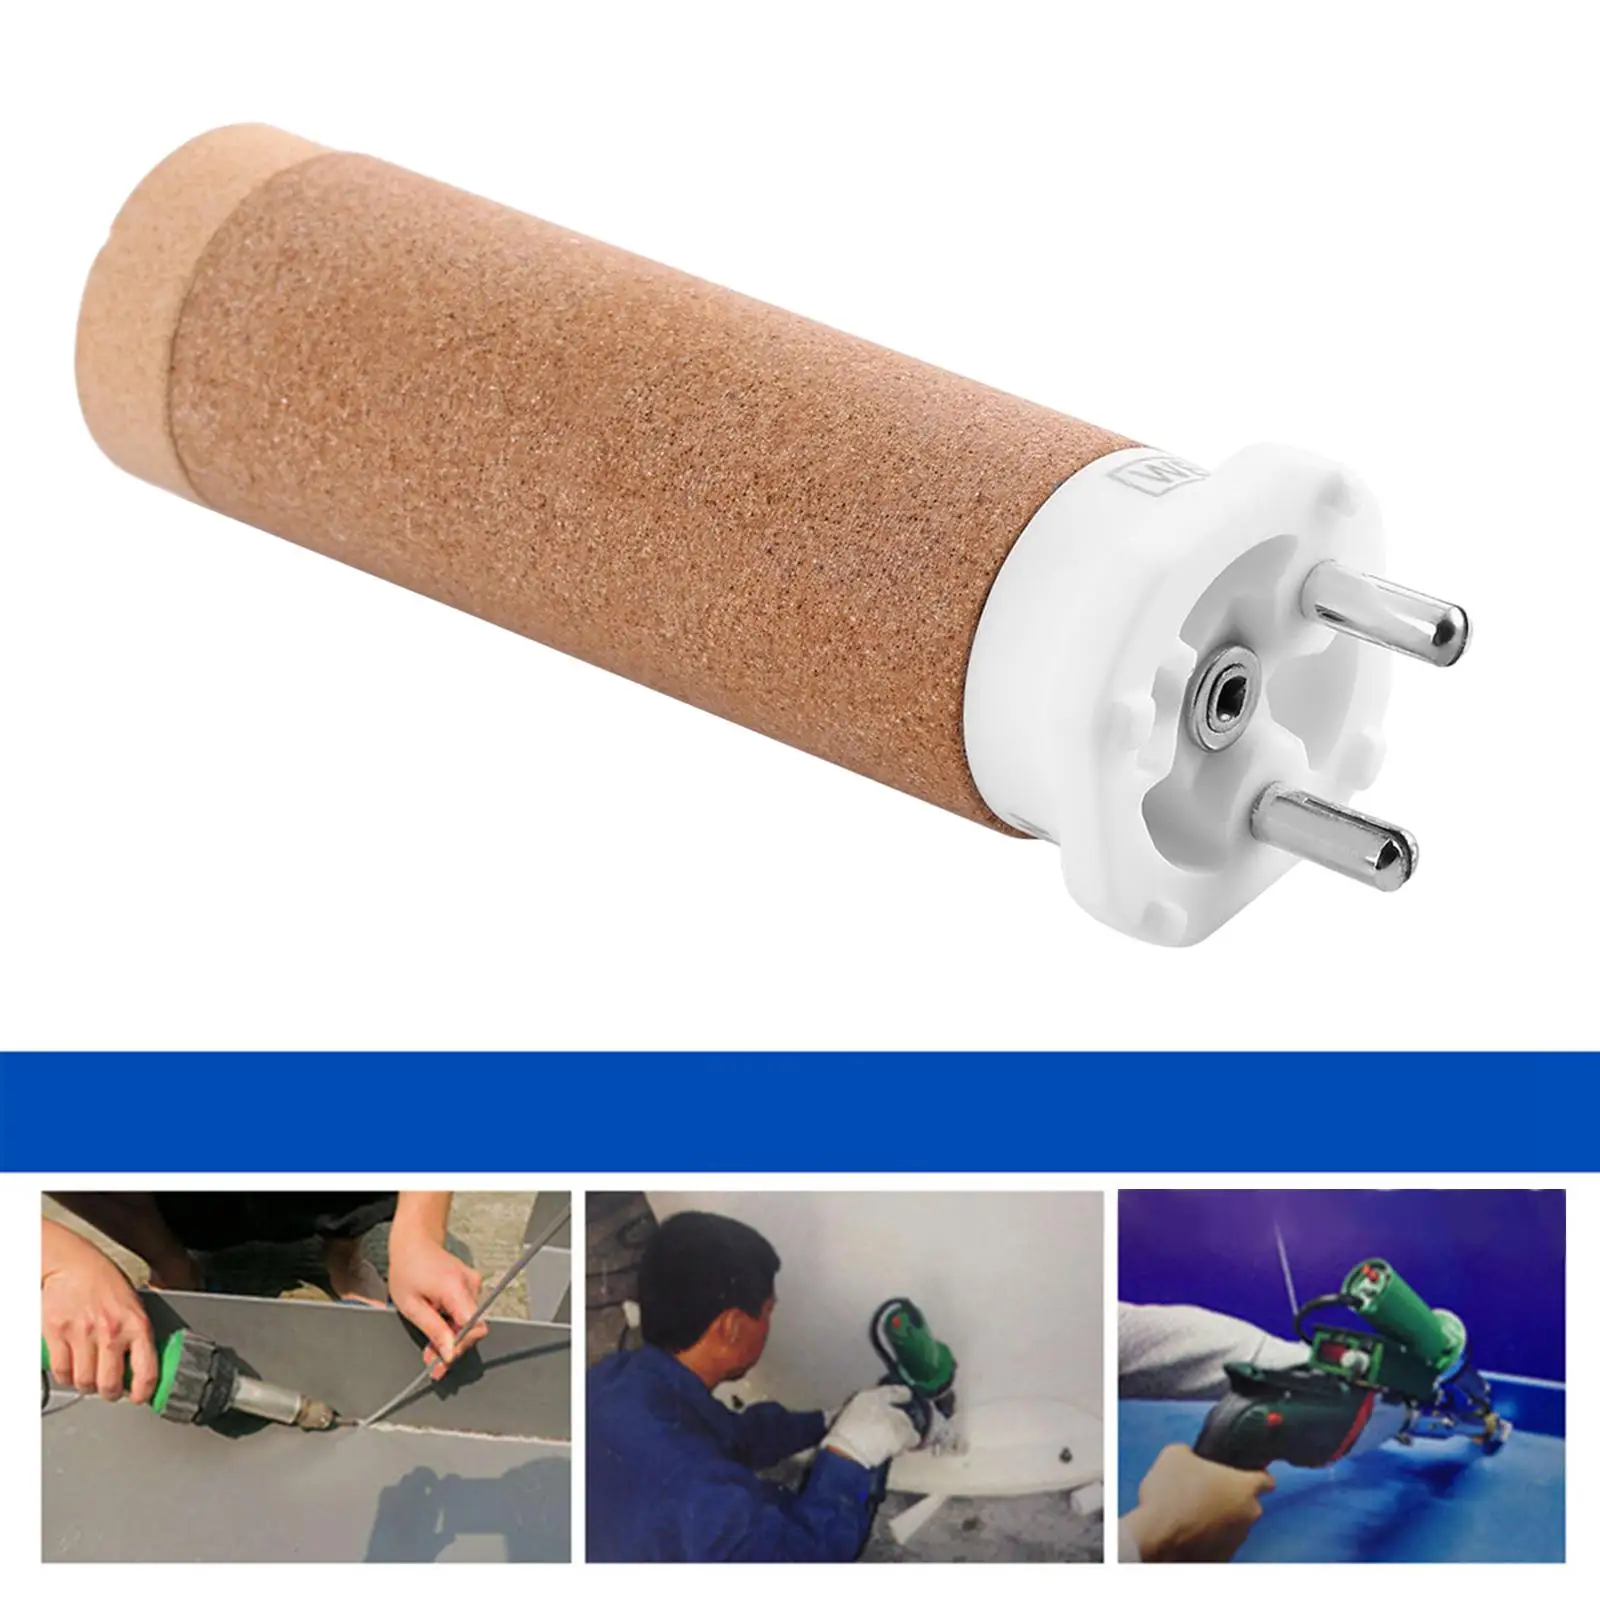 Ceramic Heating Elements 230V 1550W 100.689 Diameter 26mm Heating Core for Handheld Hot Air Plastic Welder Gun Heat Sealing